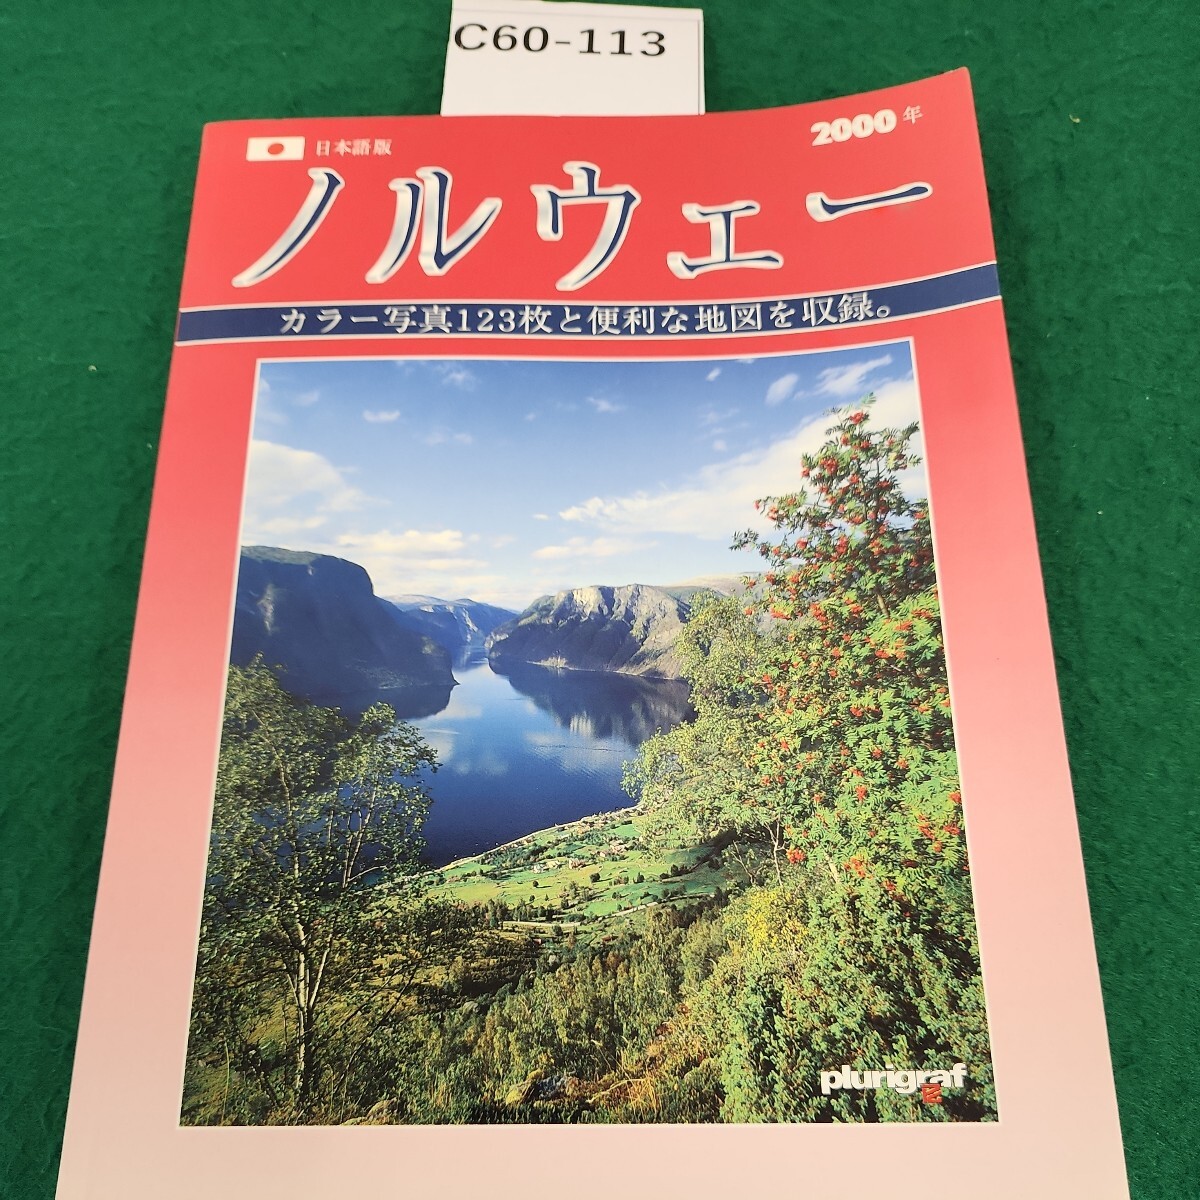 C60-1132000年日本語版ノルウェーカラー写真123枚と便利な地図を収録。_画像1